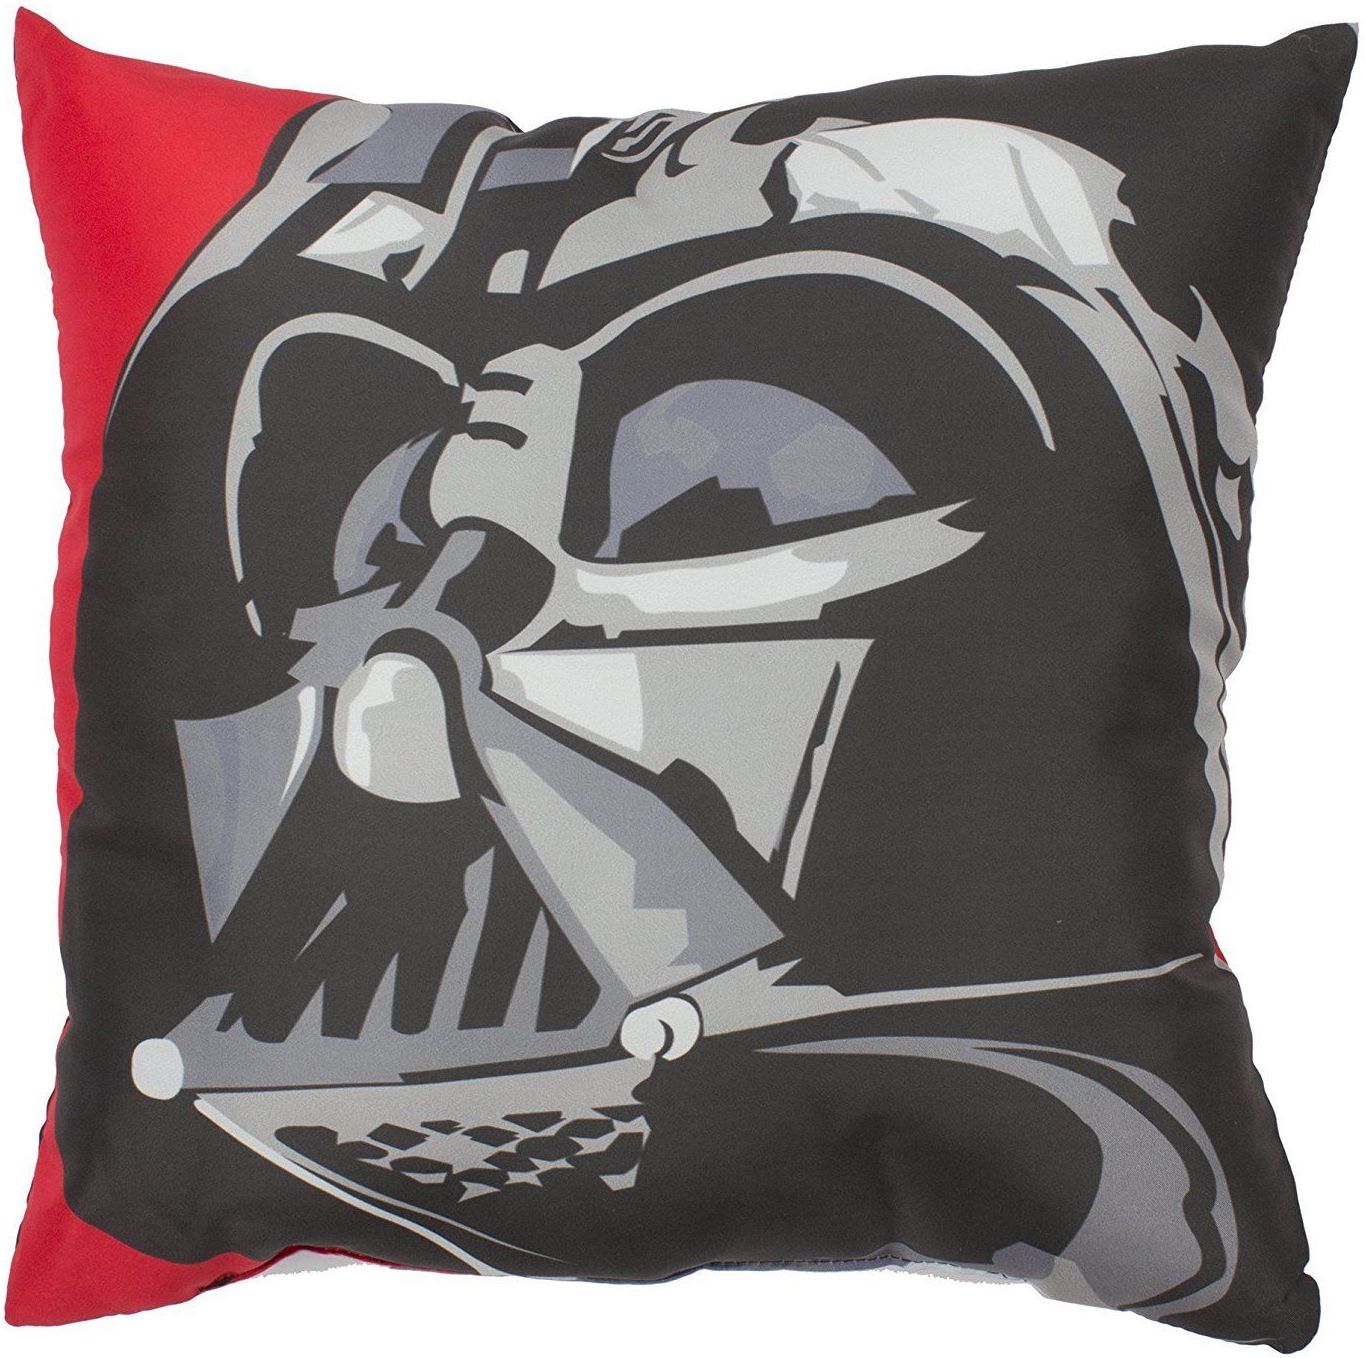 Star_Wars_Darth_Vader_Pillow_Cushion.jpg